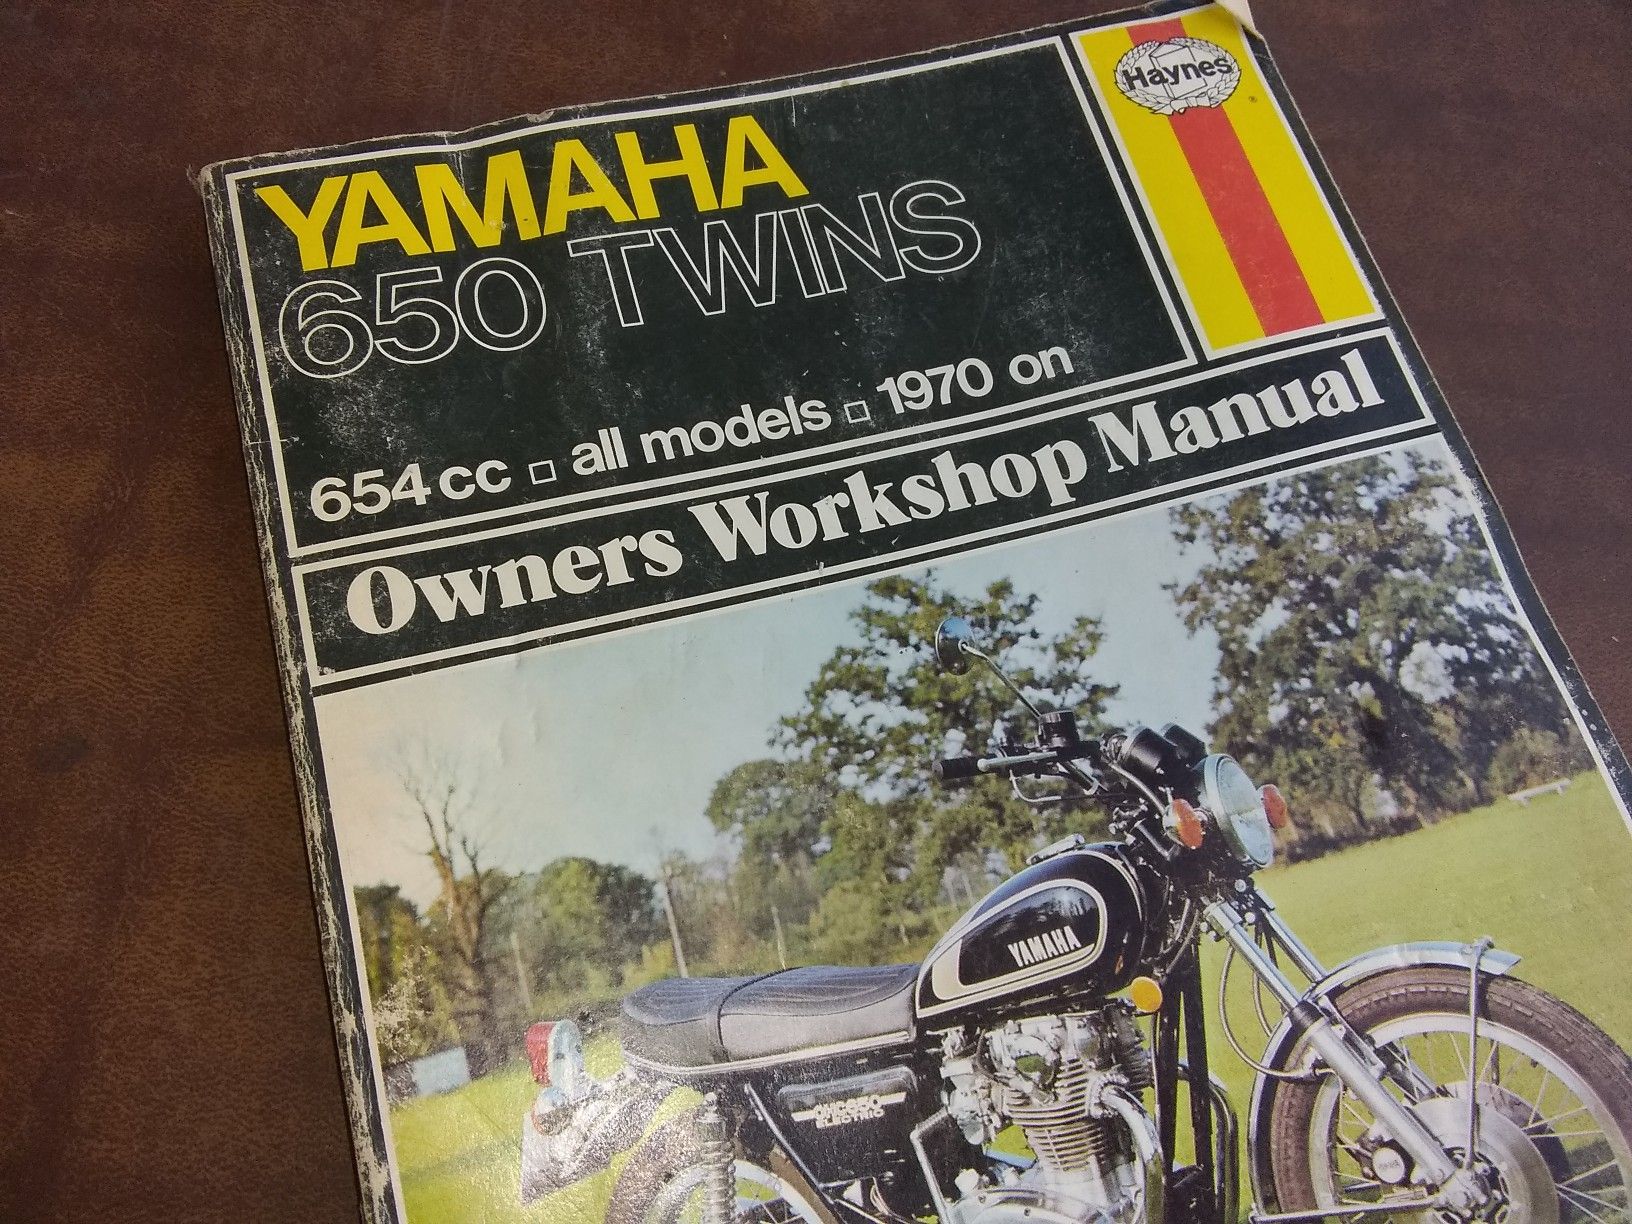 Haynes Motorcycle Repair Manual Yamaha 650 Twins,All Models,70 on.